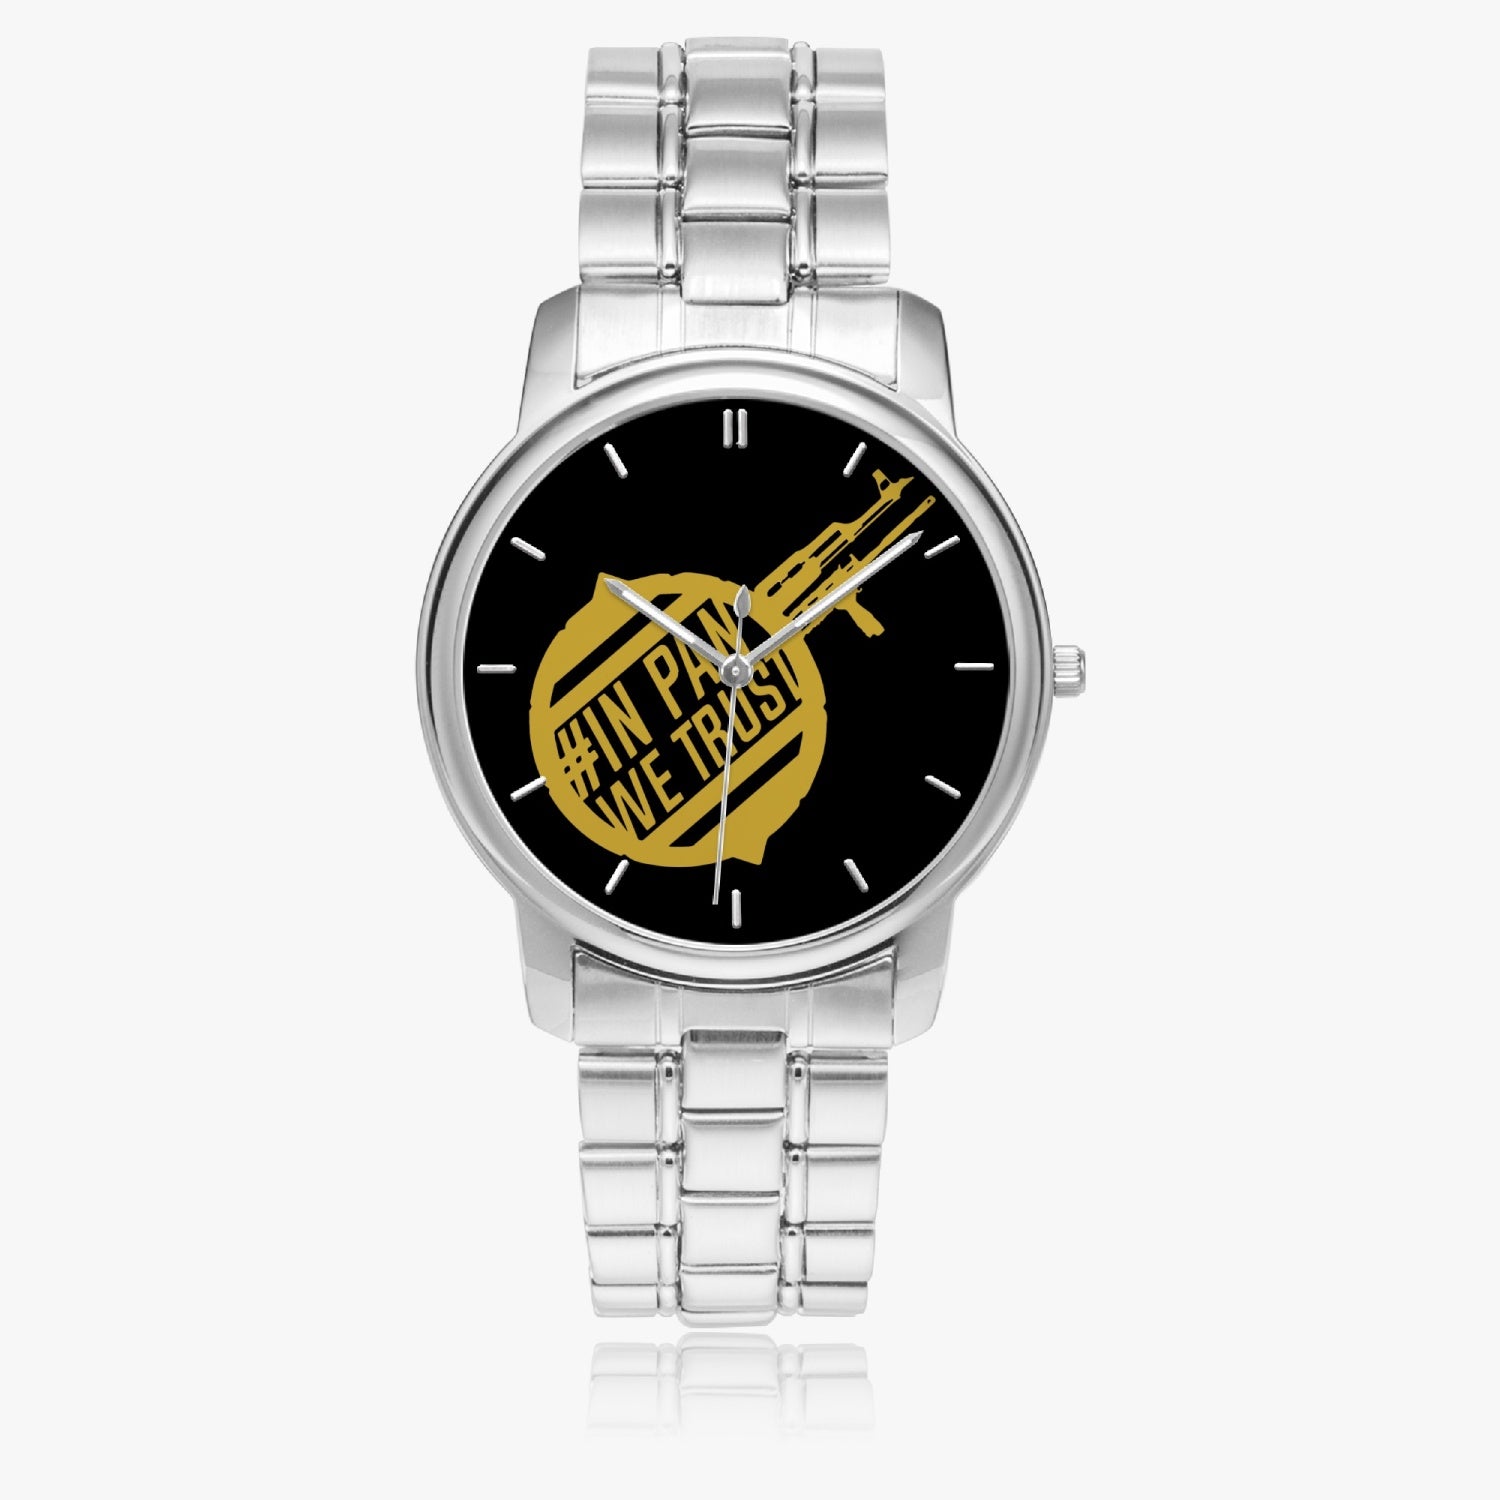 inpan Stainless Steel Quartz Watch